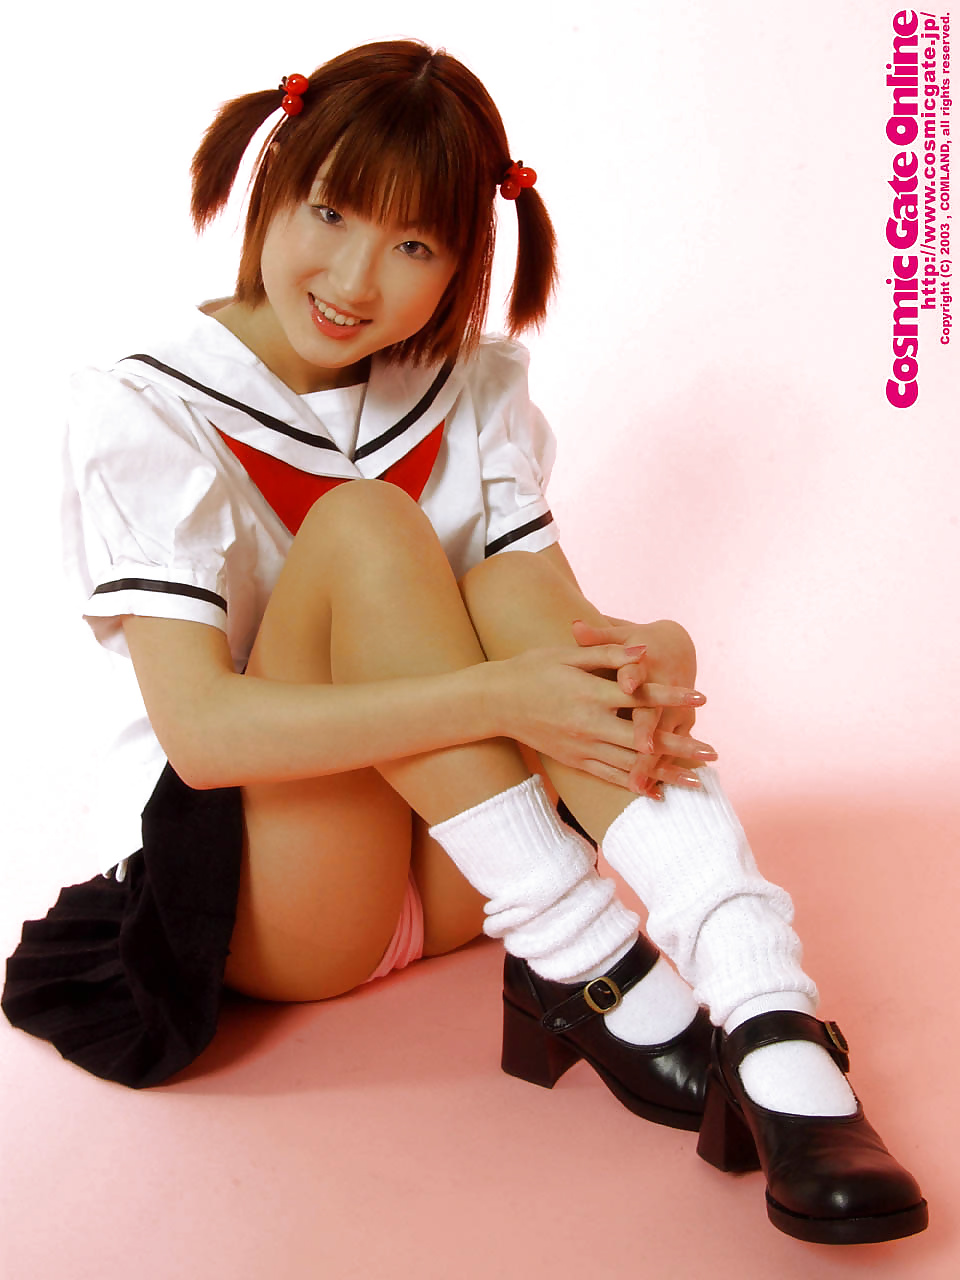 Japanese School Girls 12 porn gallery